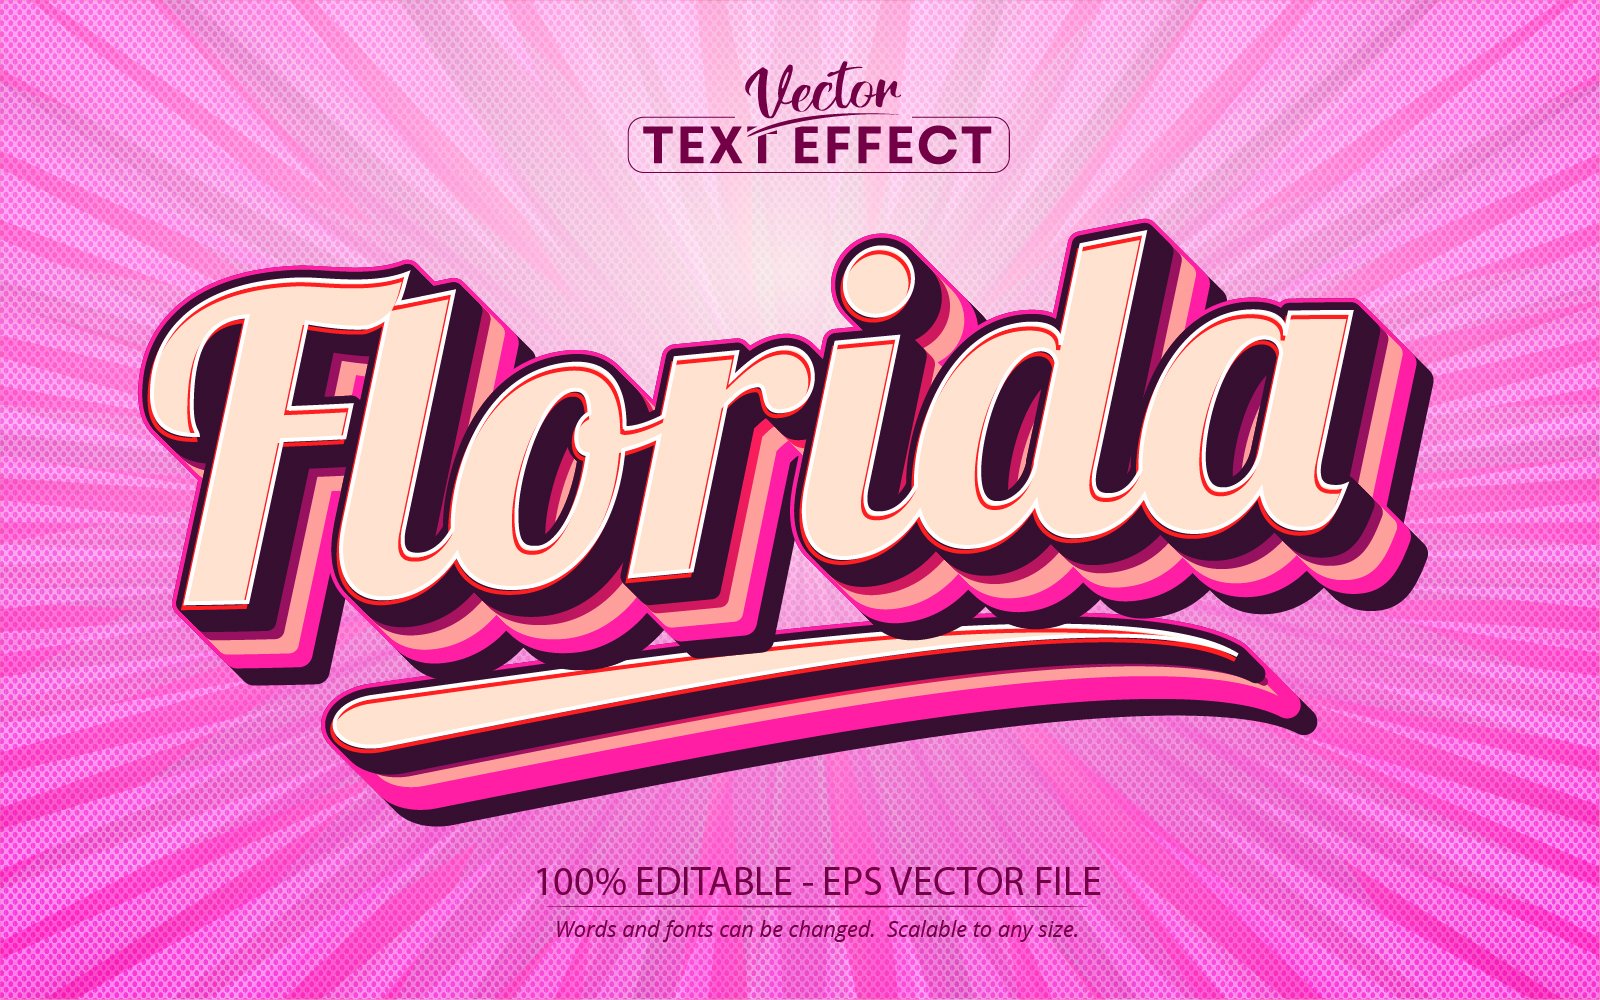 Template #218697 Design Florida Webdesign Template - Logo template Preview